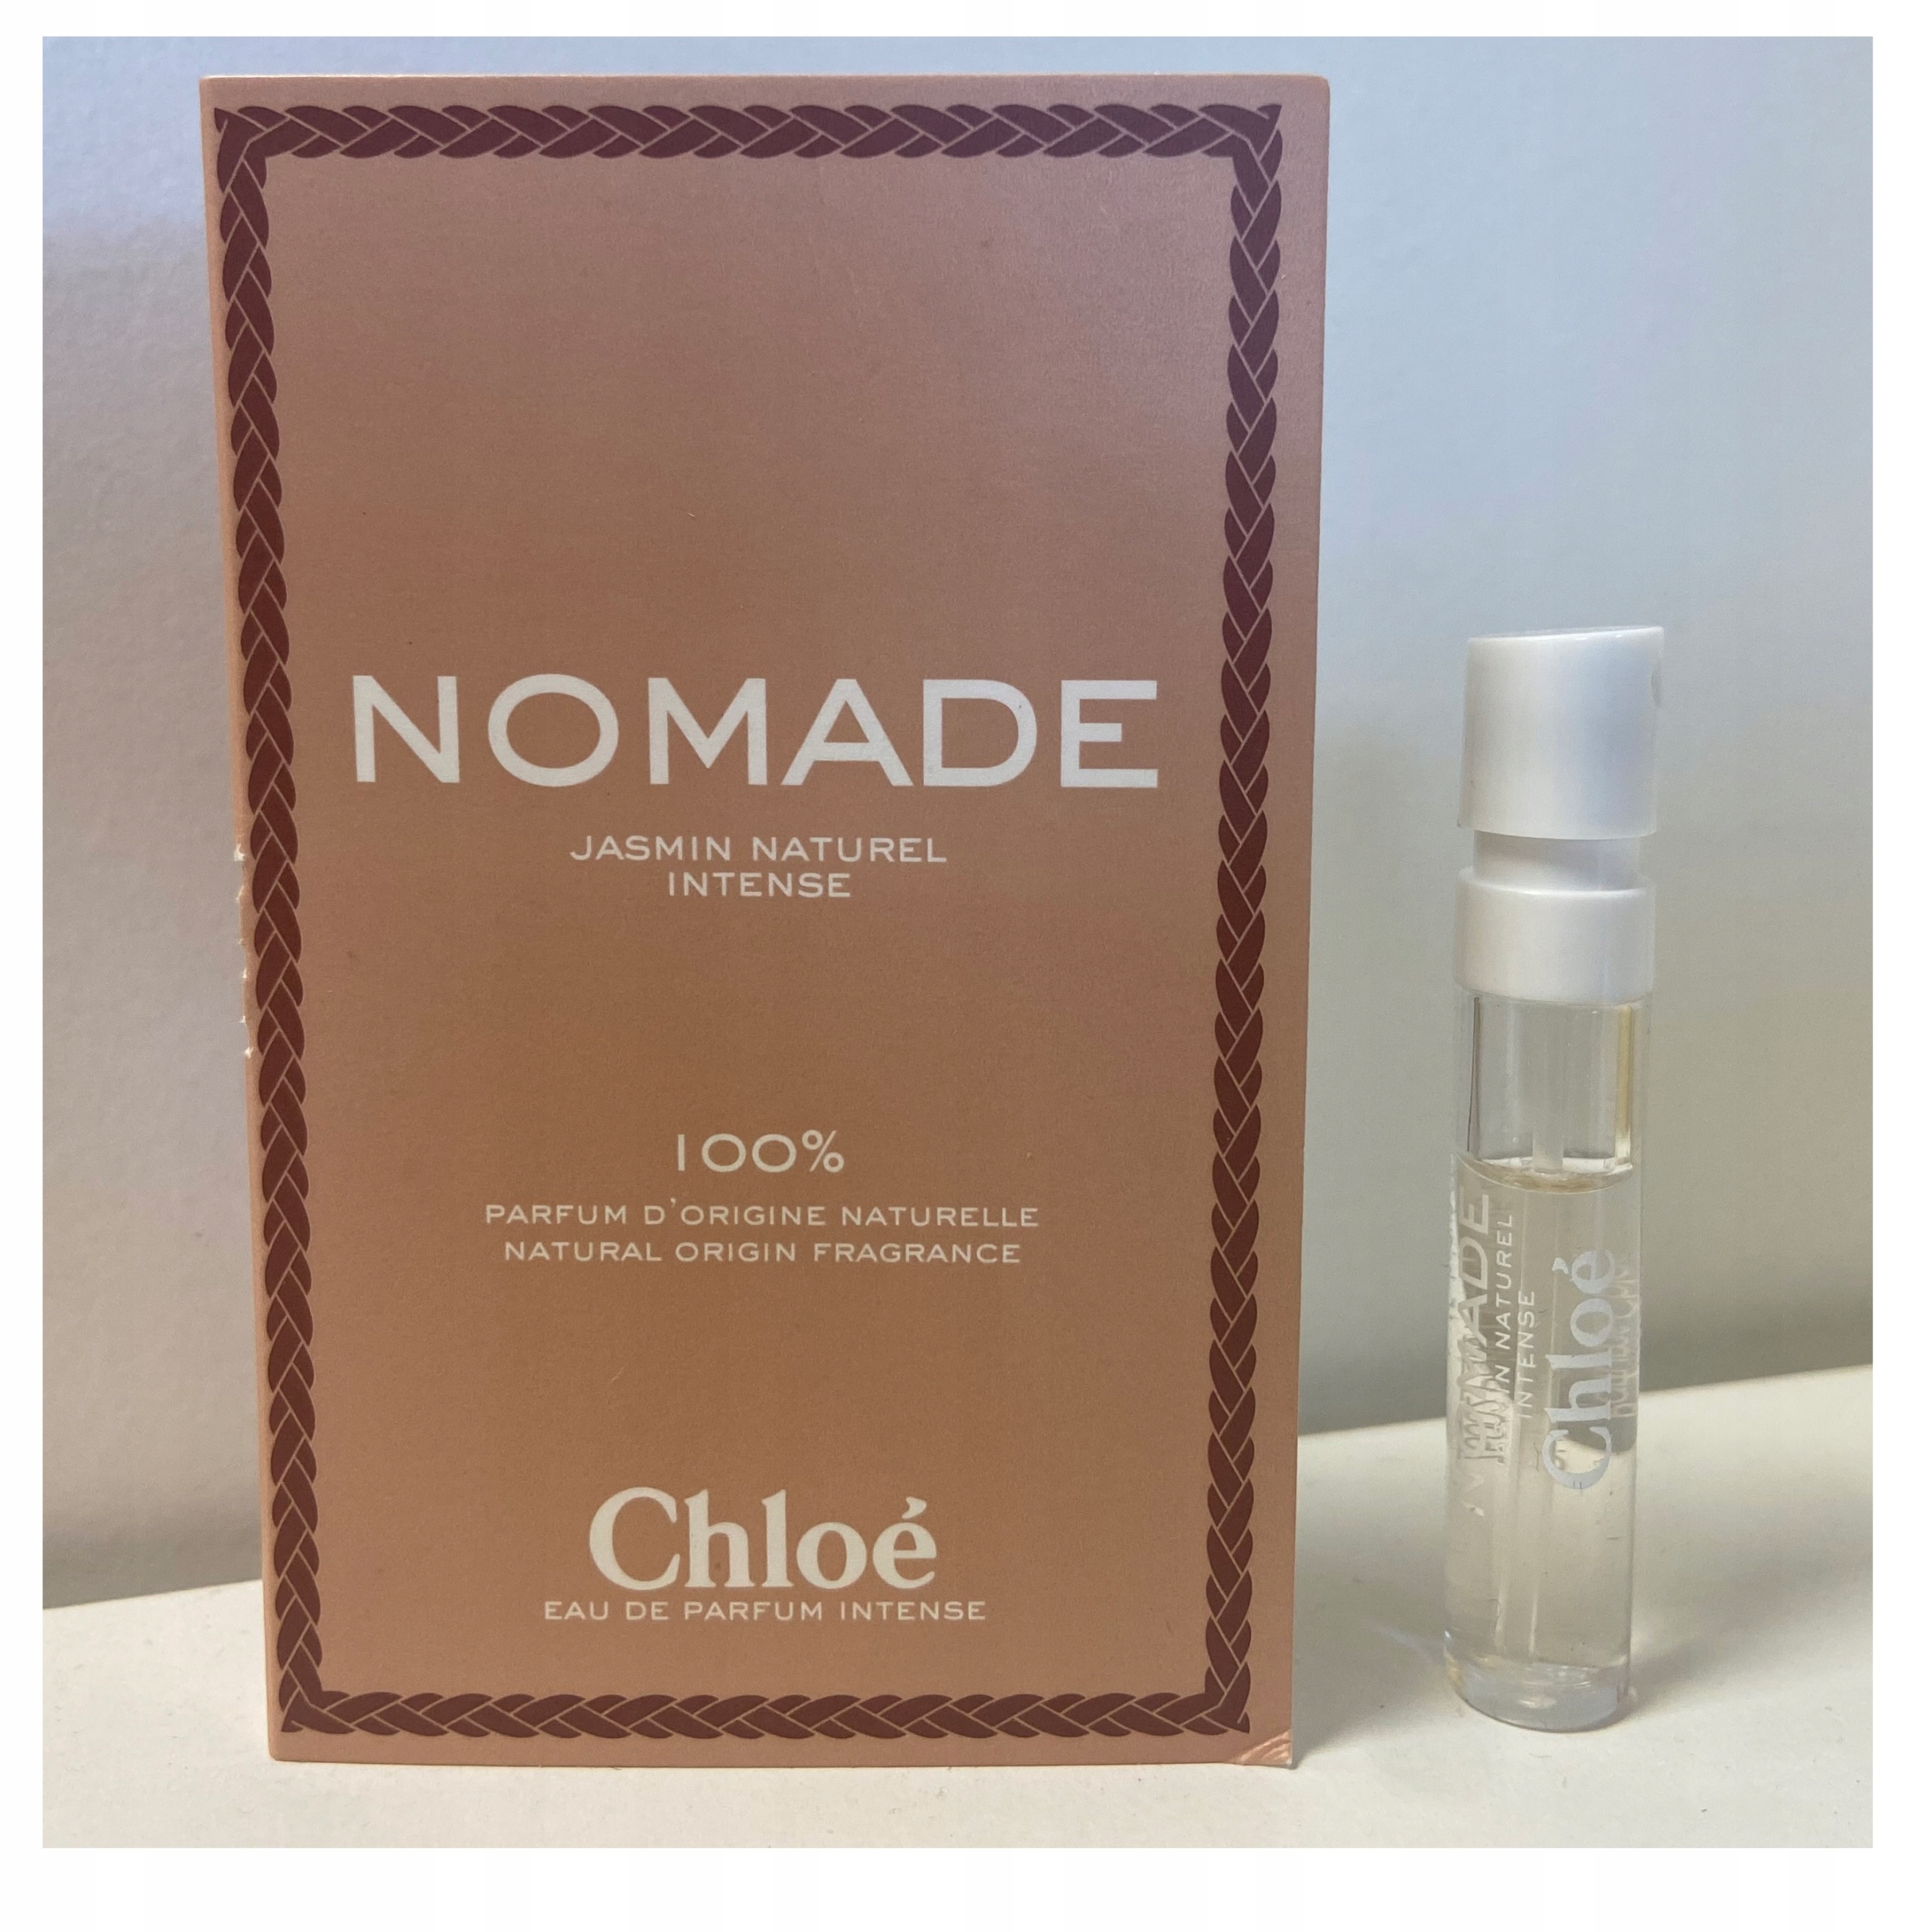 Chloe Nomade Jasmin Naturel - Eau de Parfum